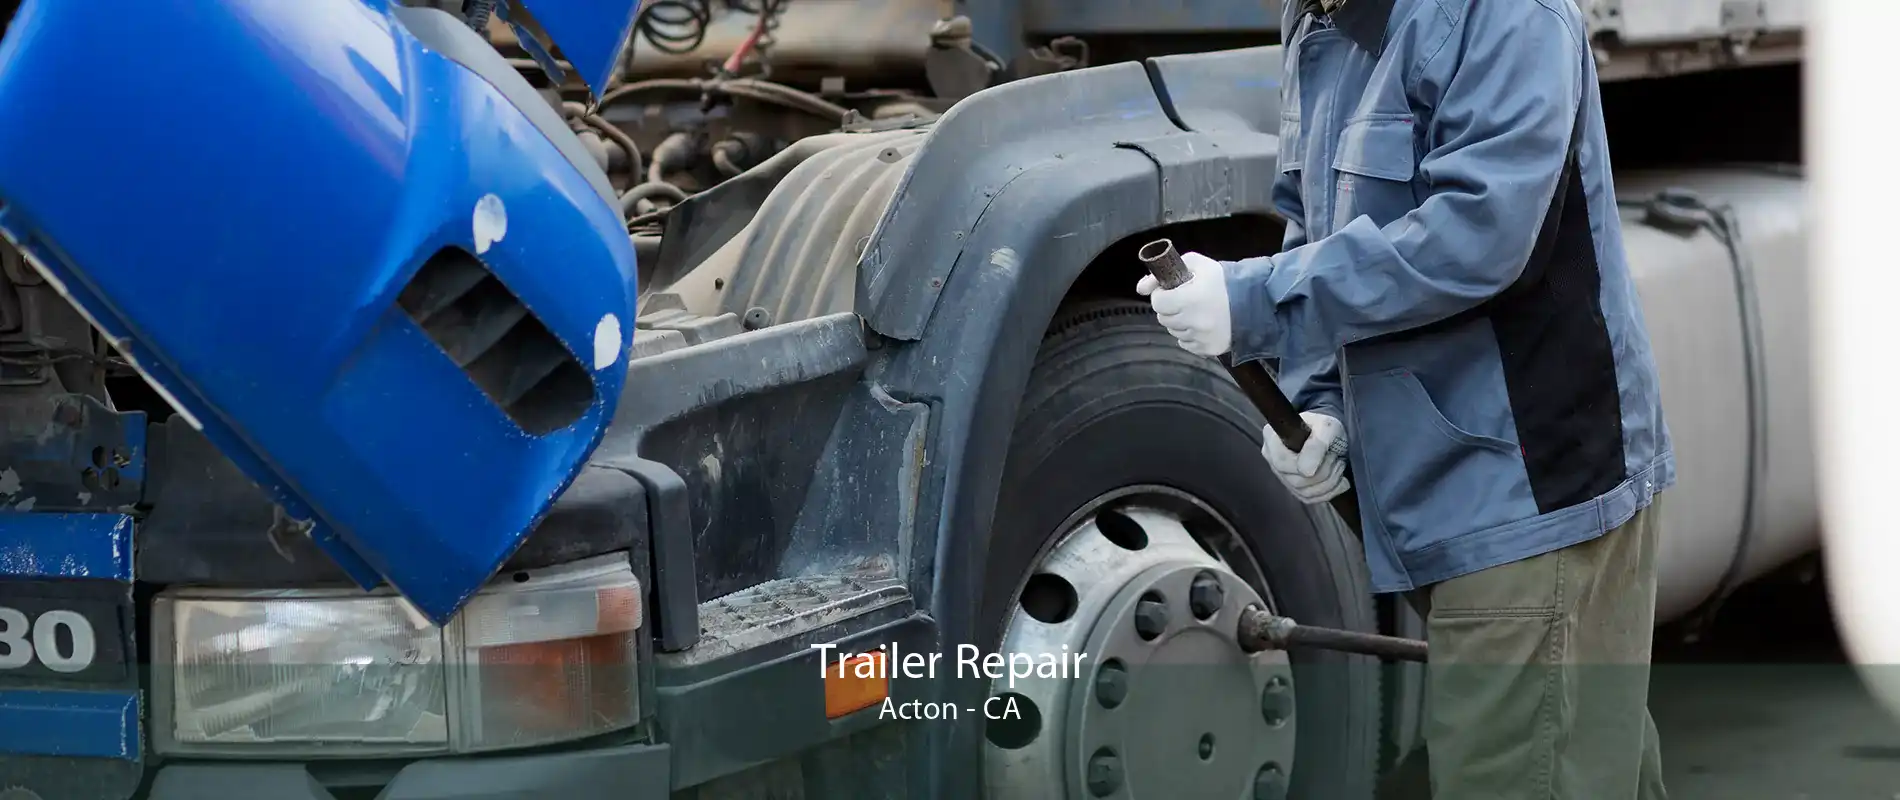 Trailer Repair Acton - CA